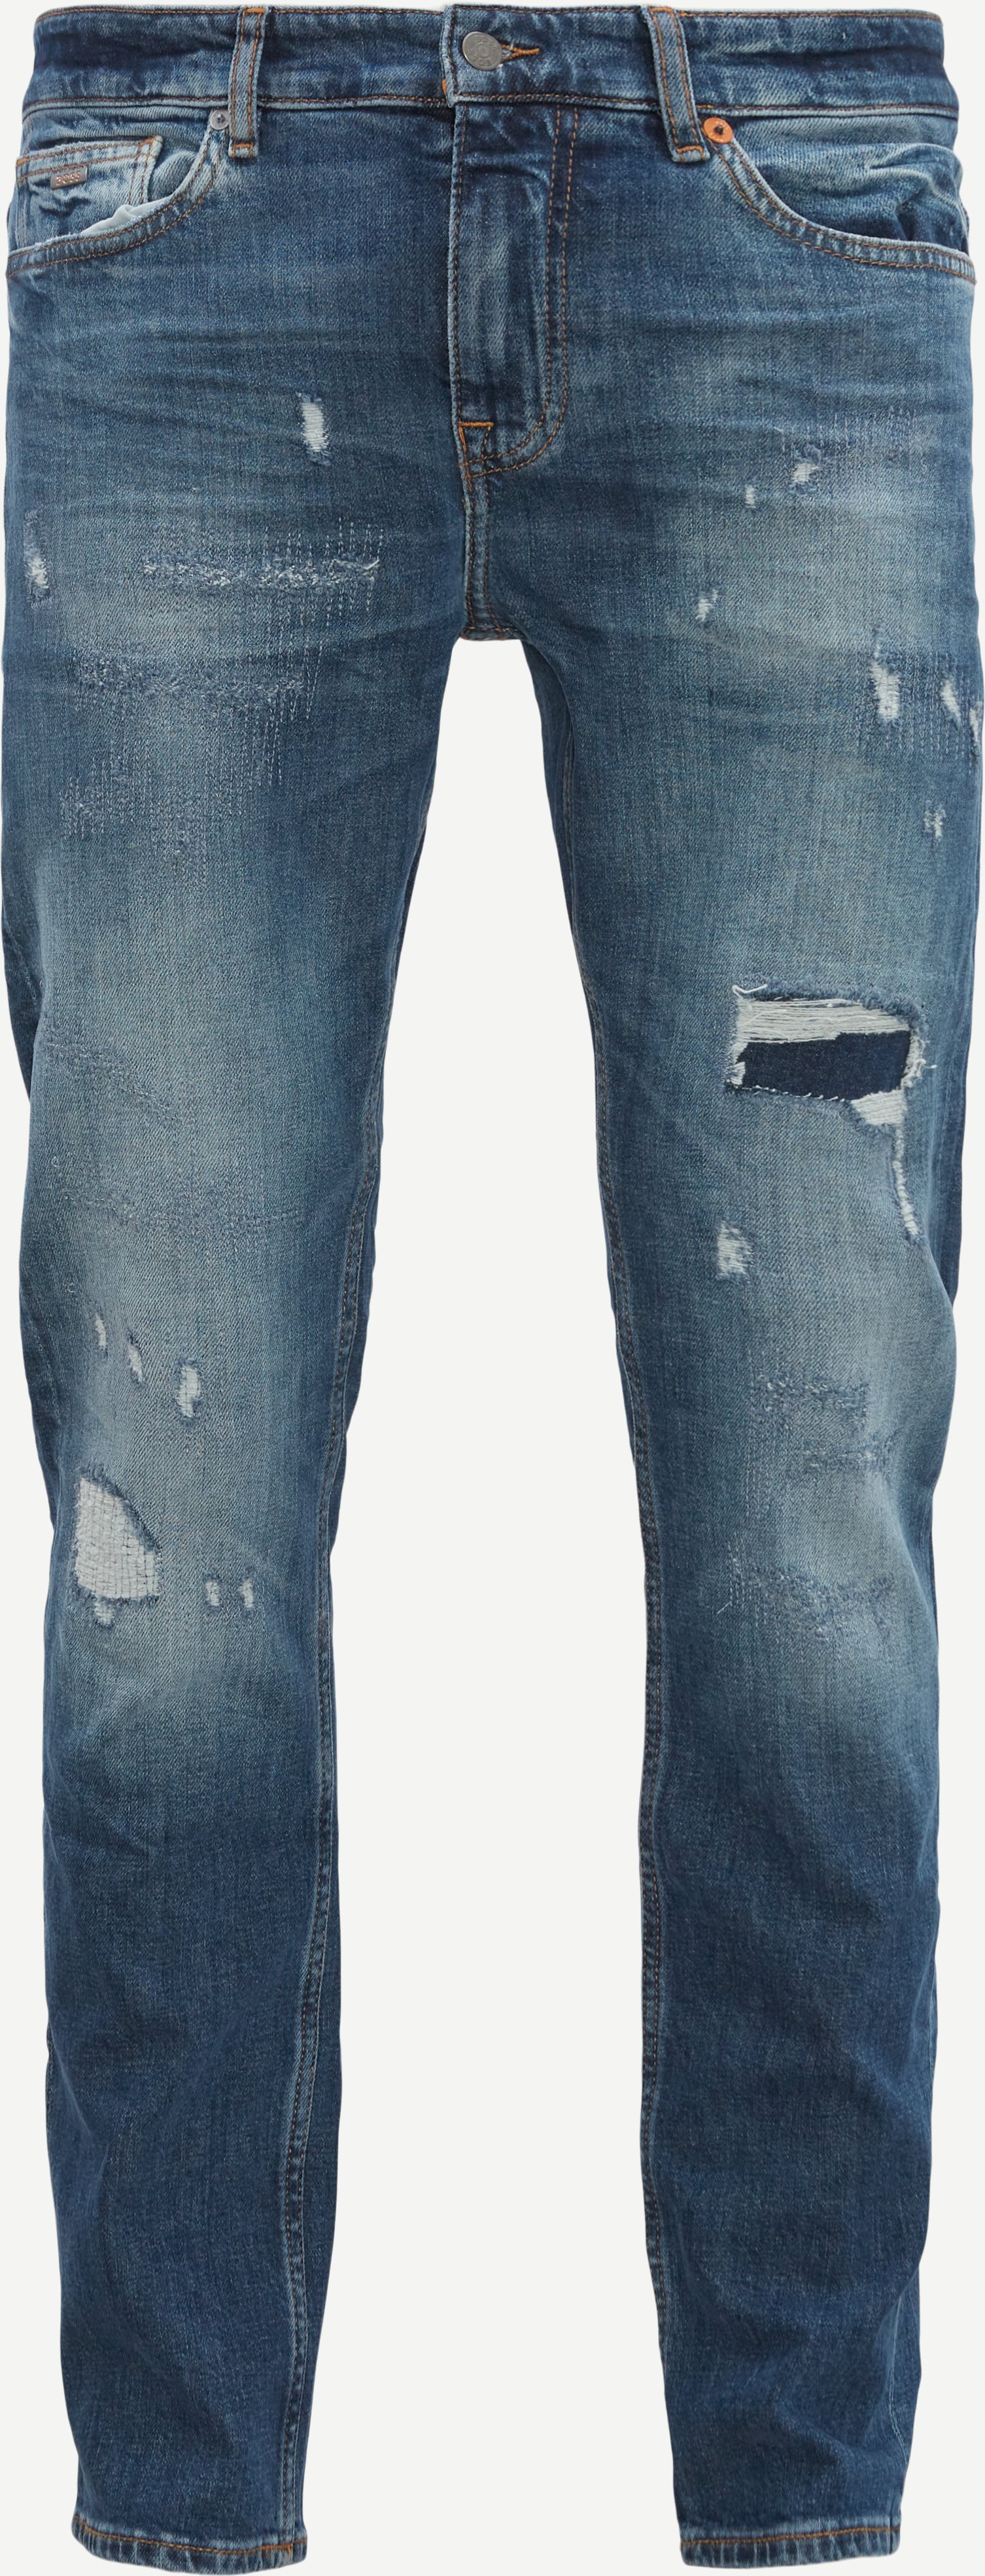 Delaware Bc Silver Jeans - Jeans - Slim fit - Denim